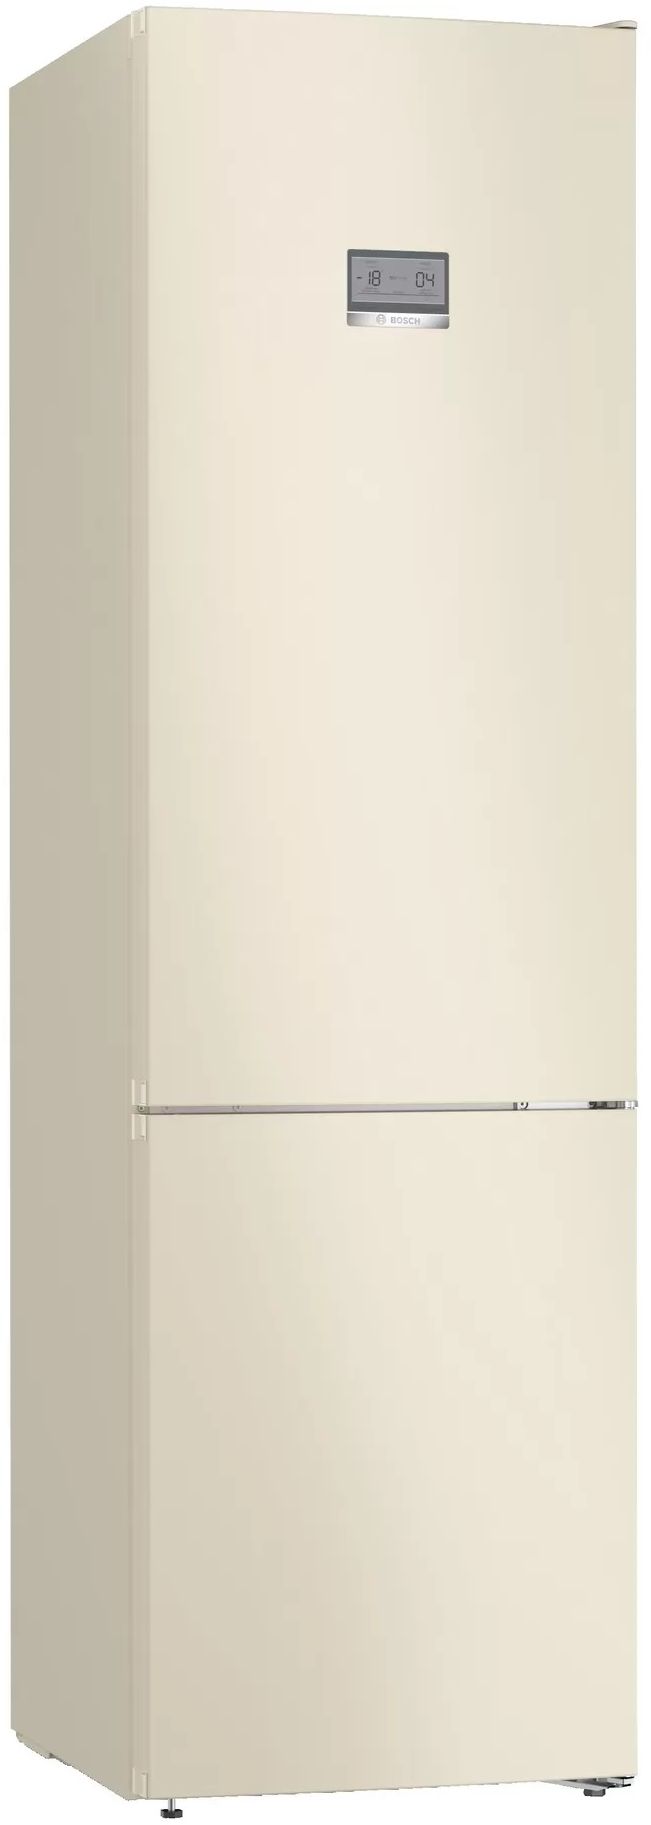 Двухкамерный холодильник BOSCH KGN39AK32R